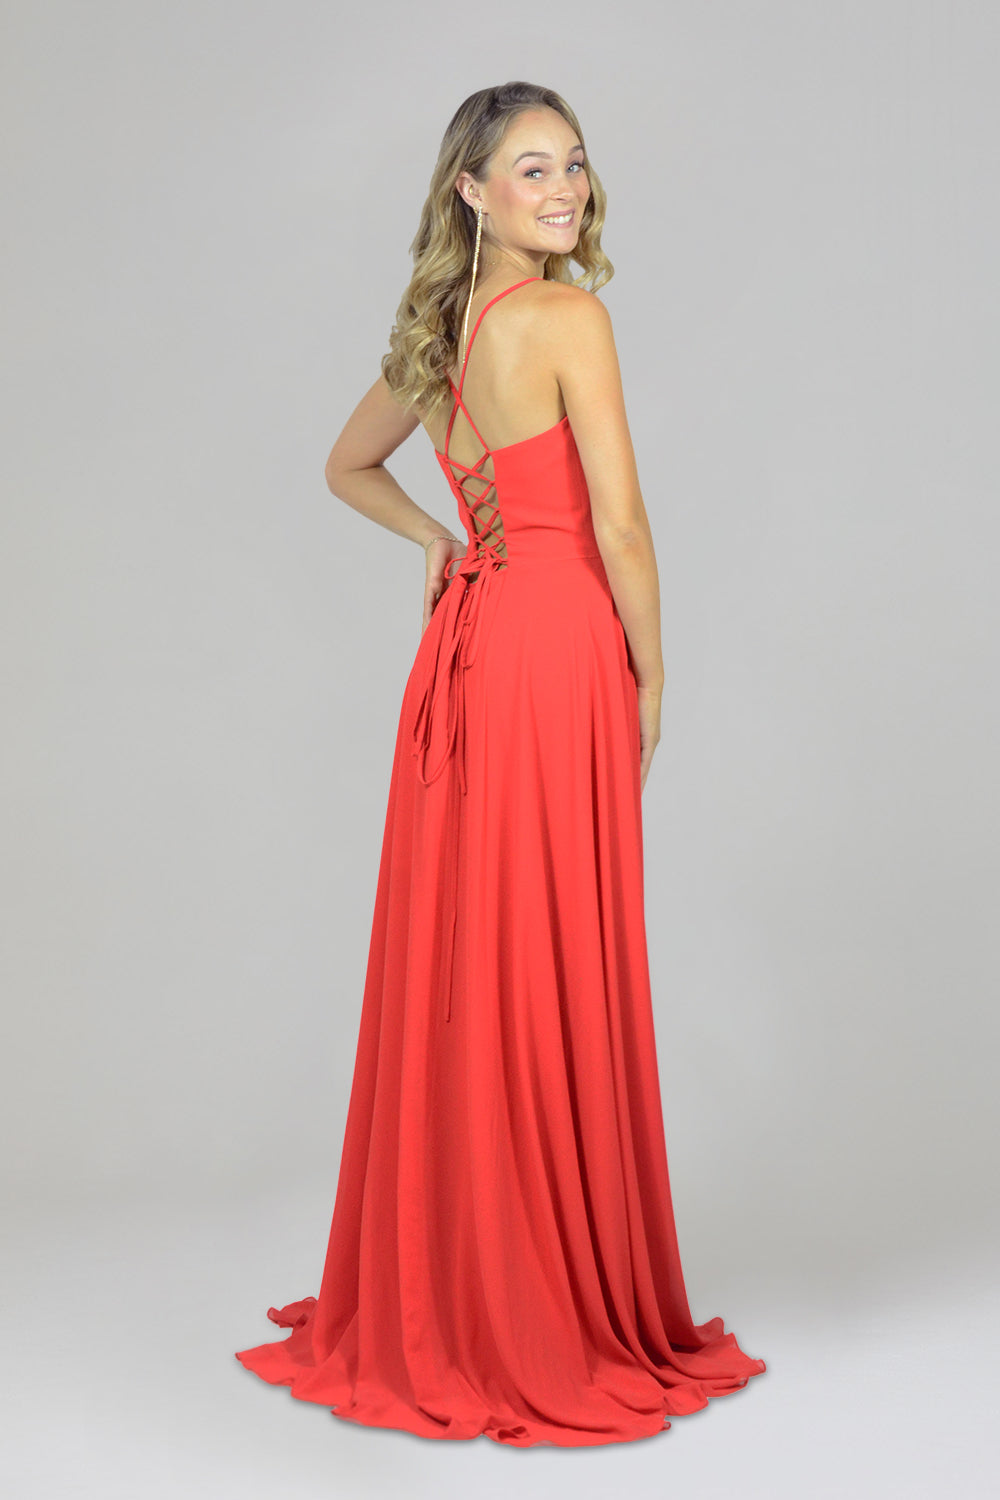 red formal dresses custom made dressmaker perth australia envious bridal & formal